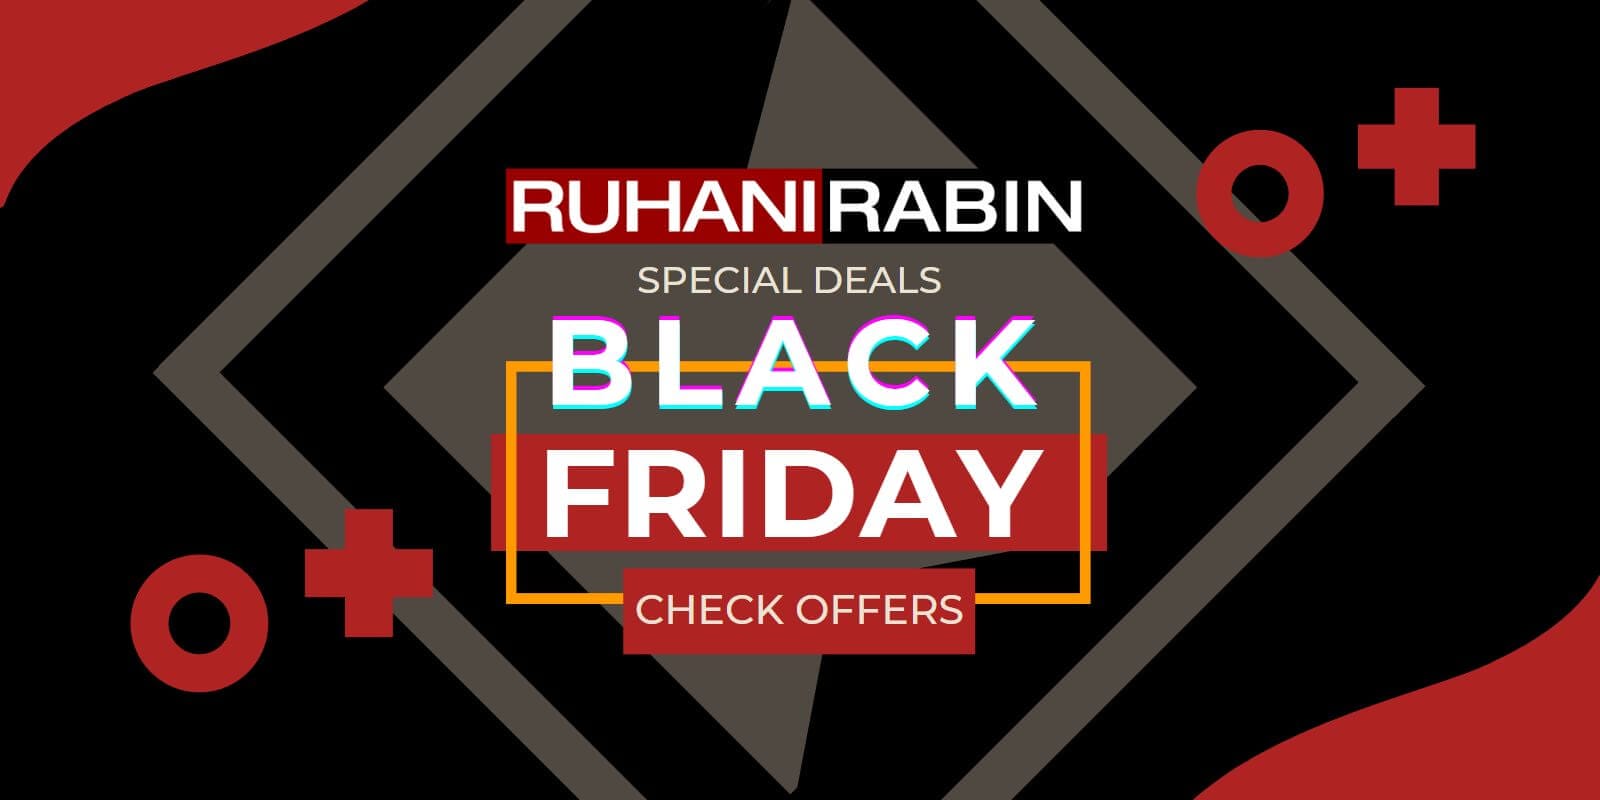 Ruhanirabin Black Friday